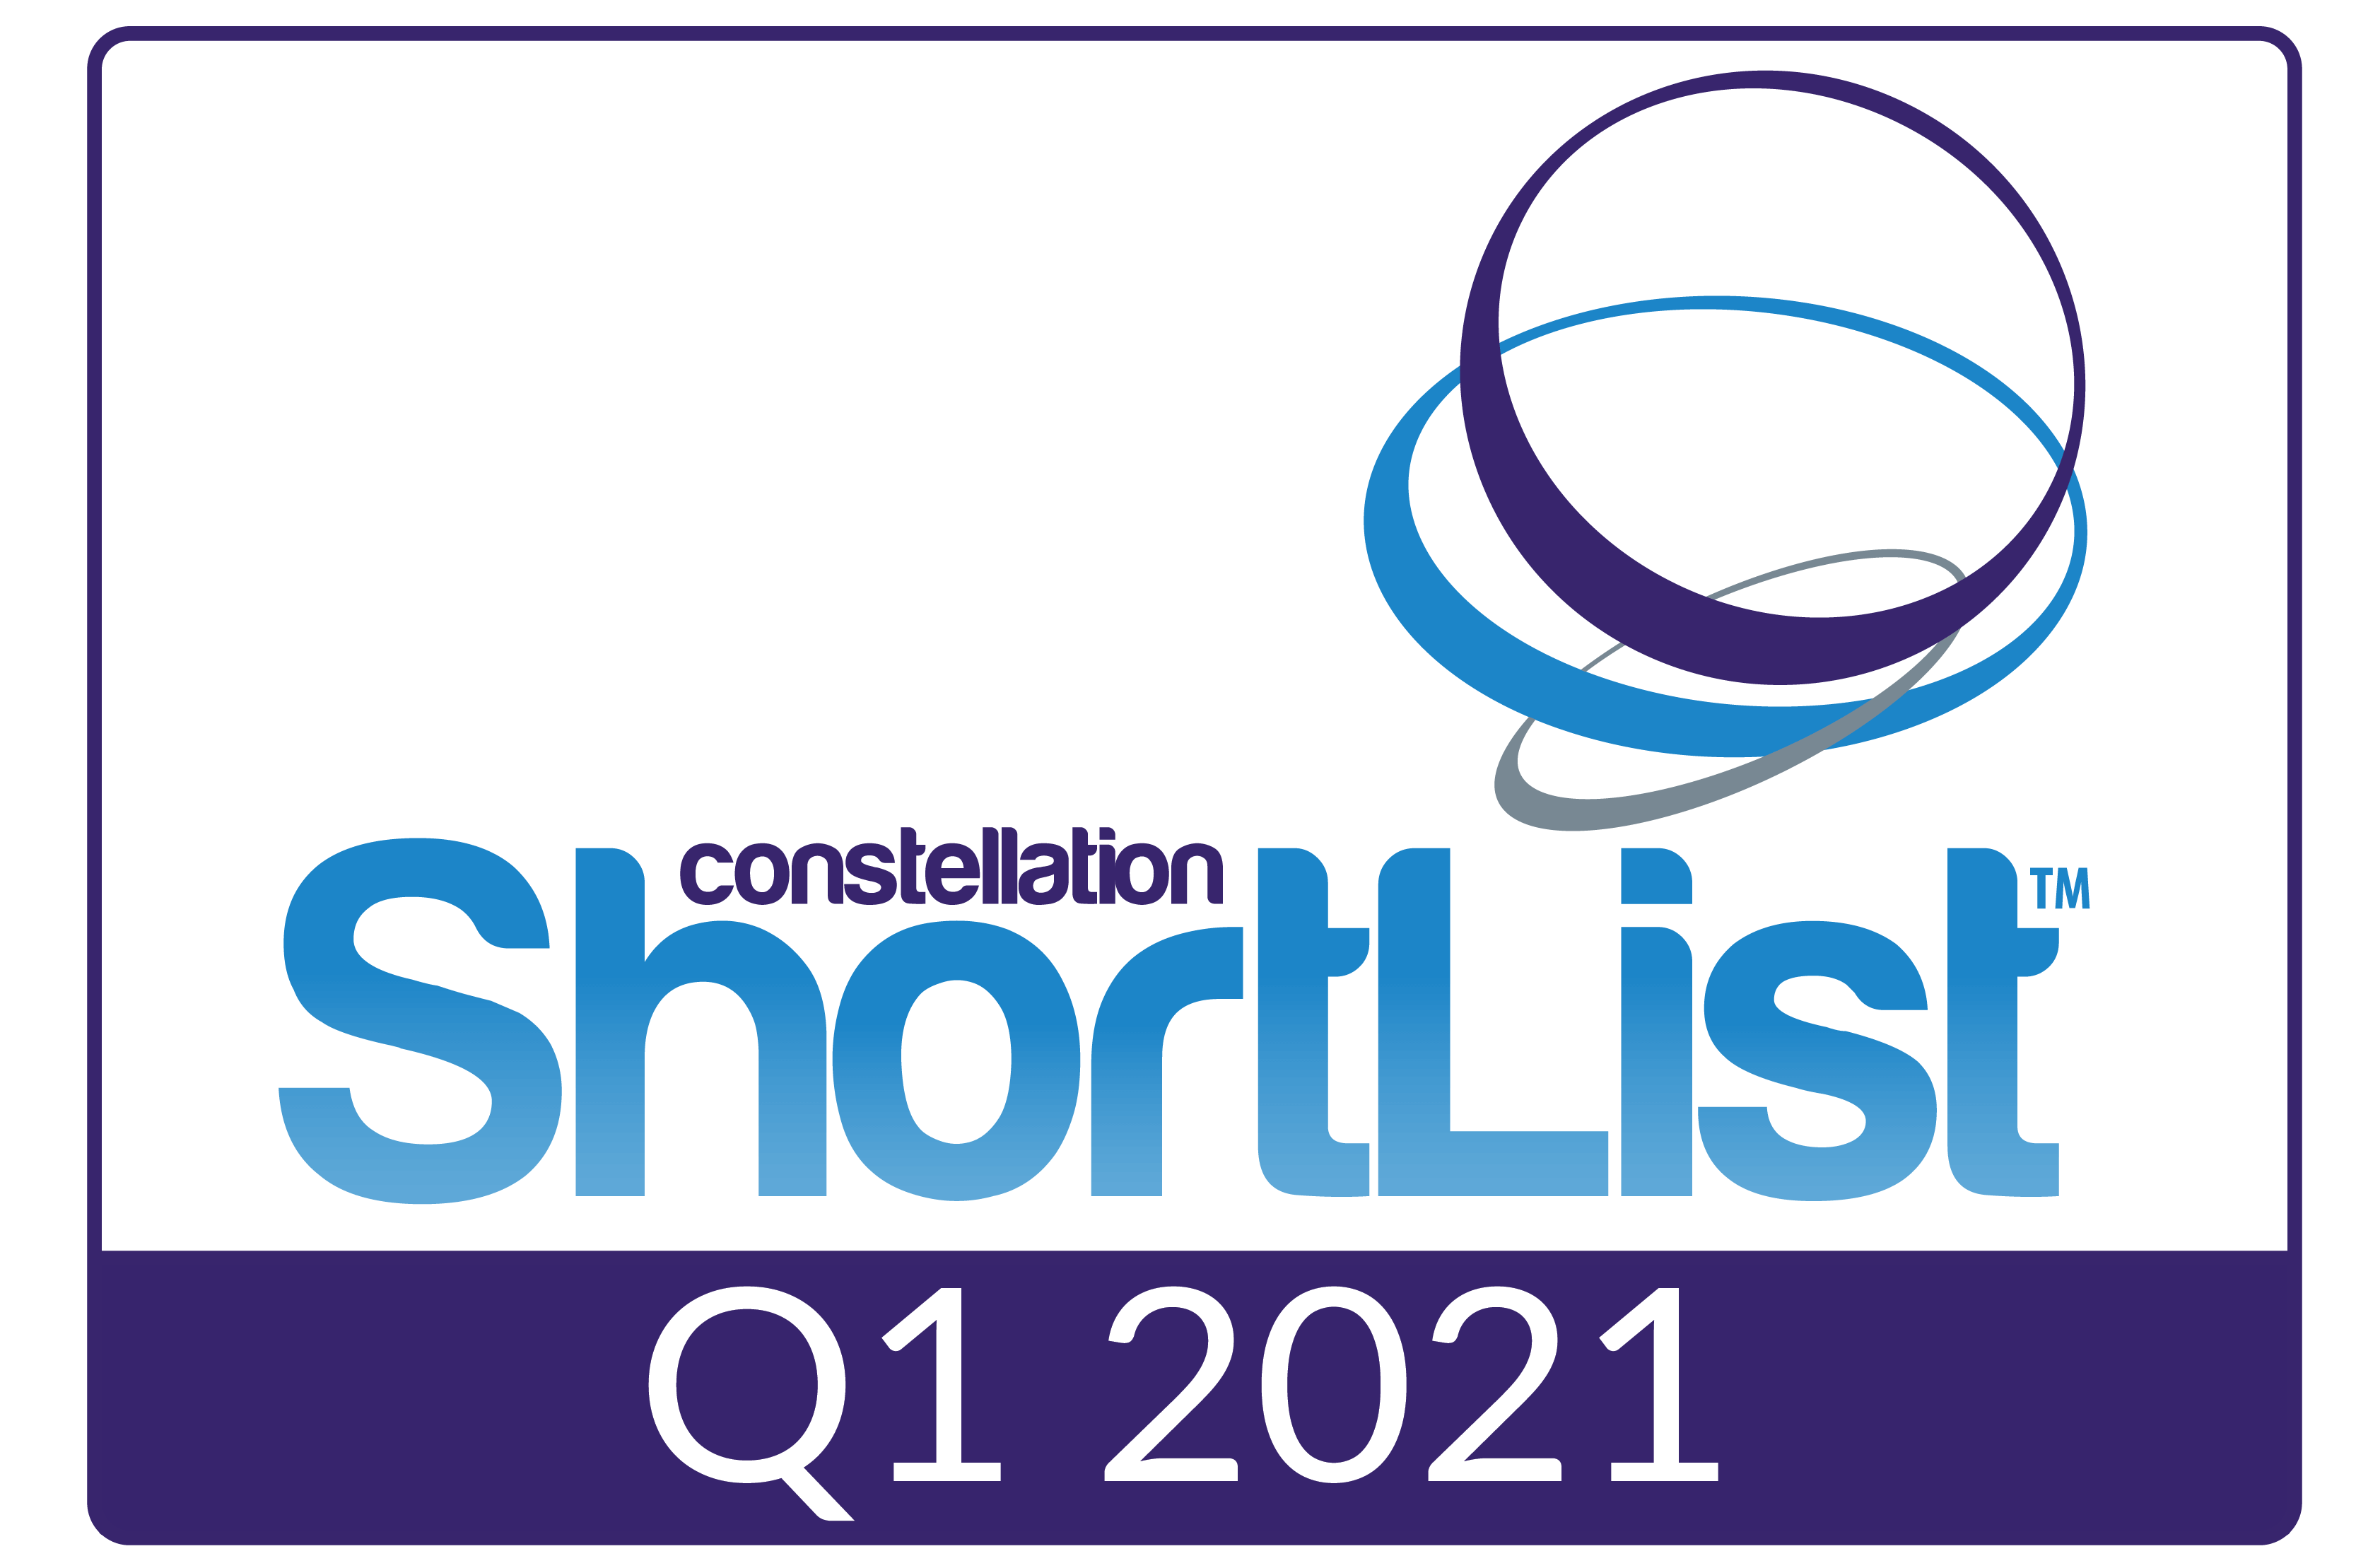 Constellation ShortList Q1, 2021 award badge